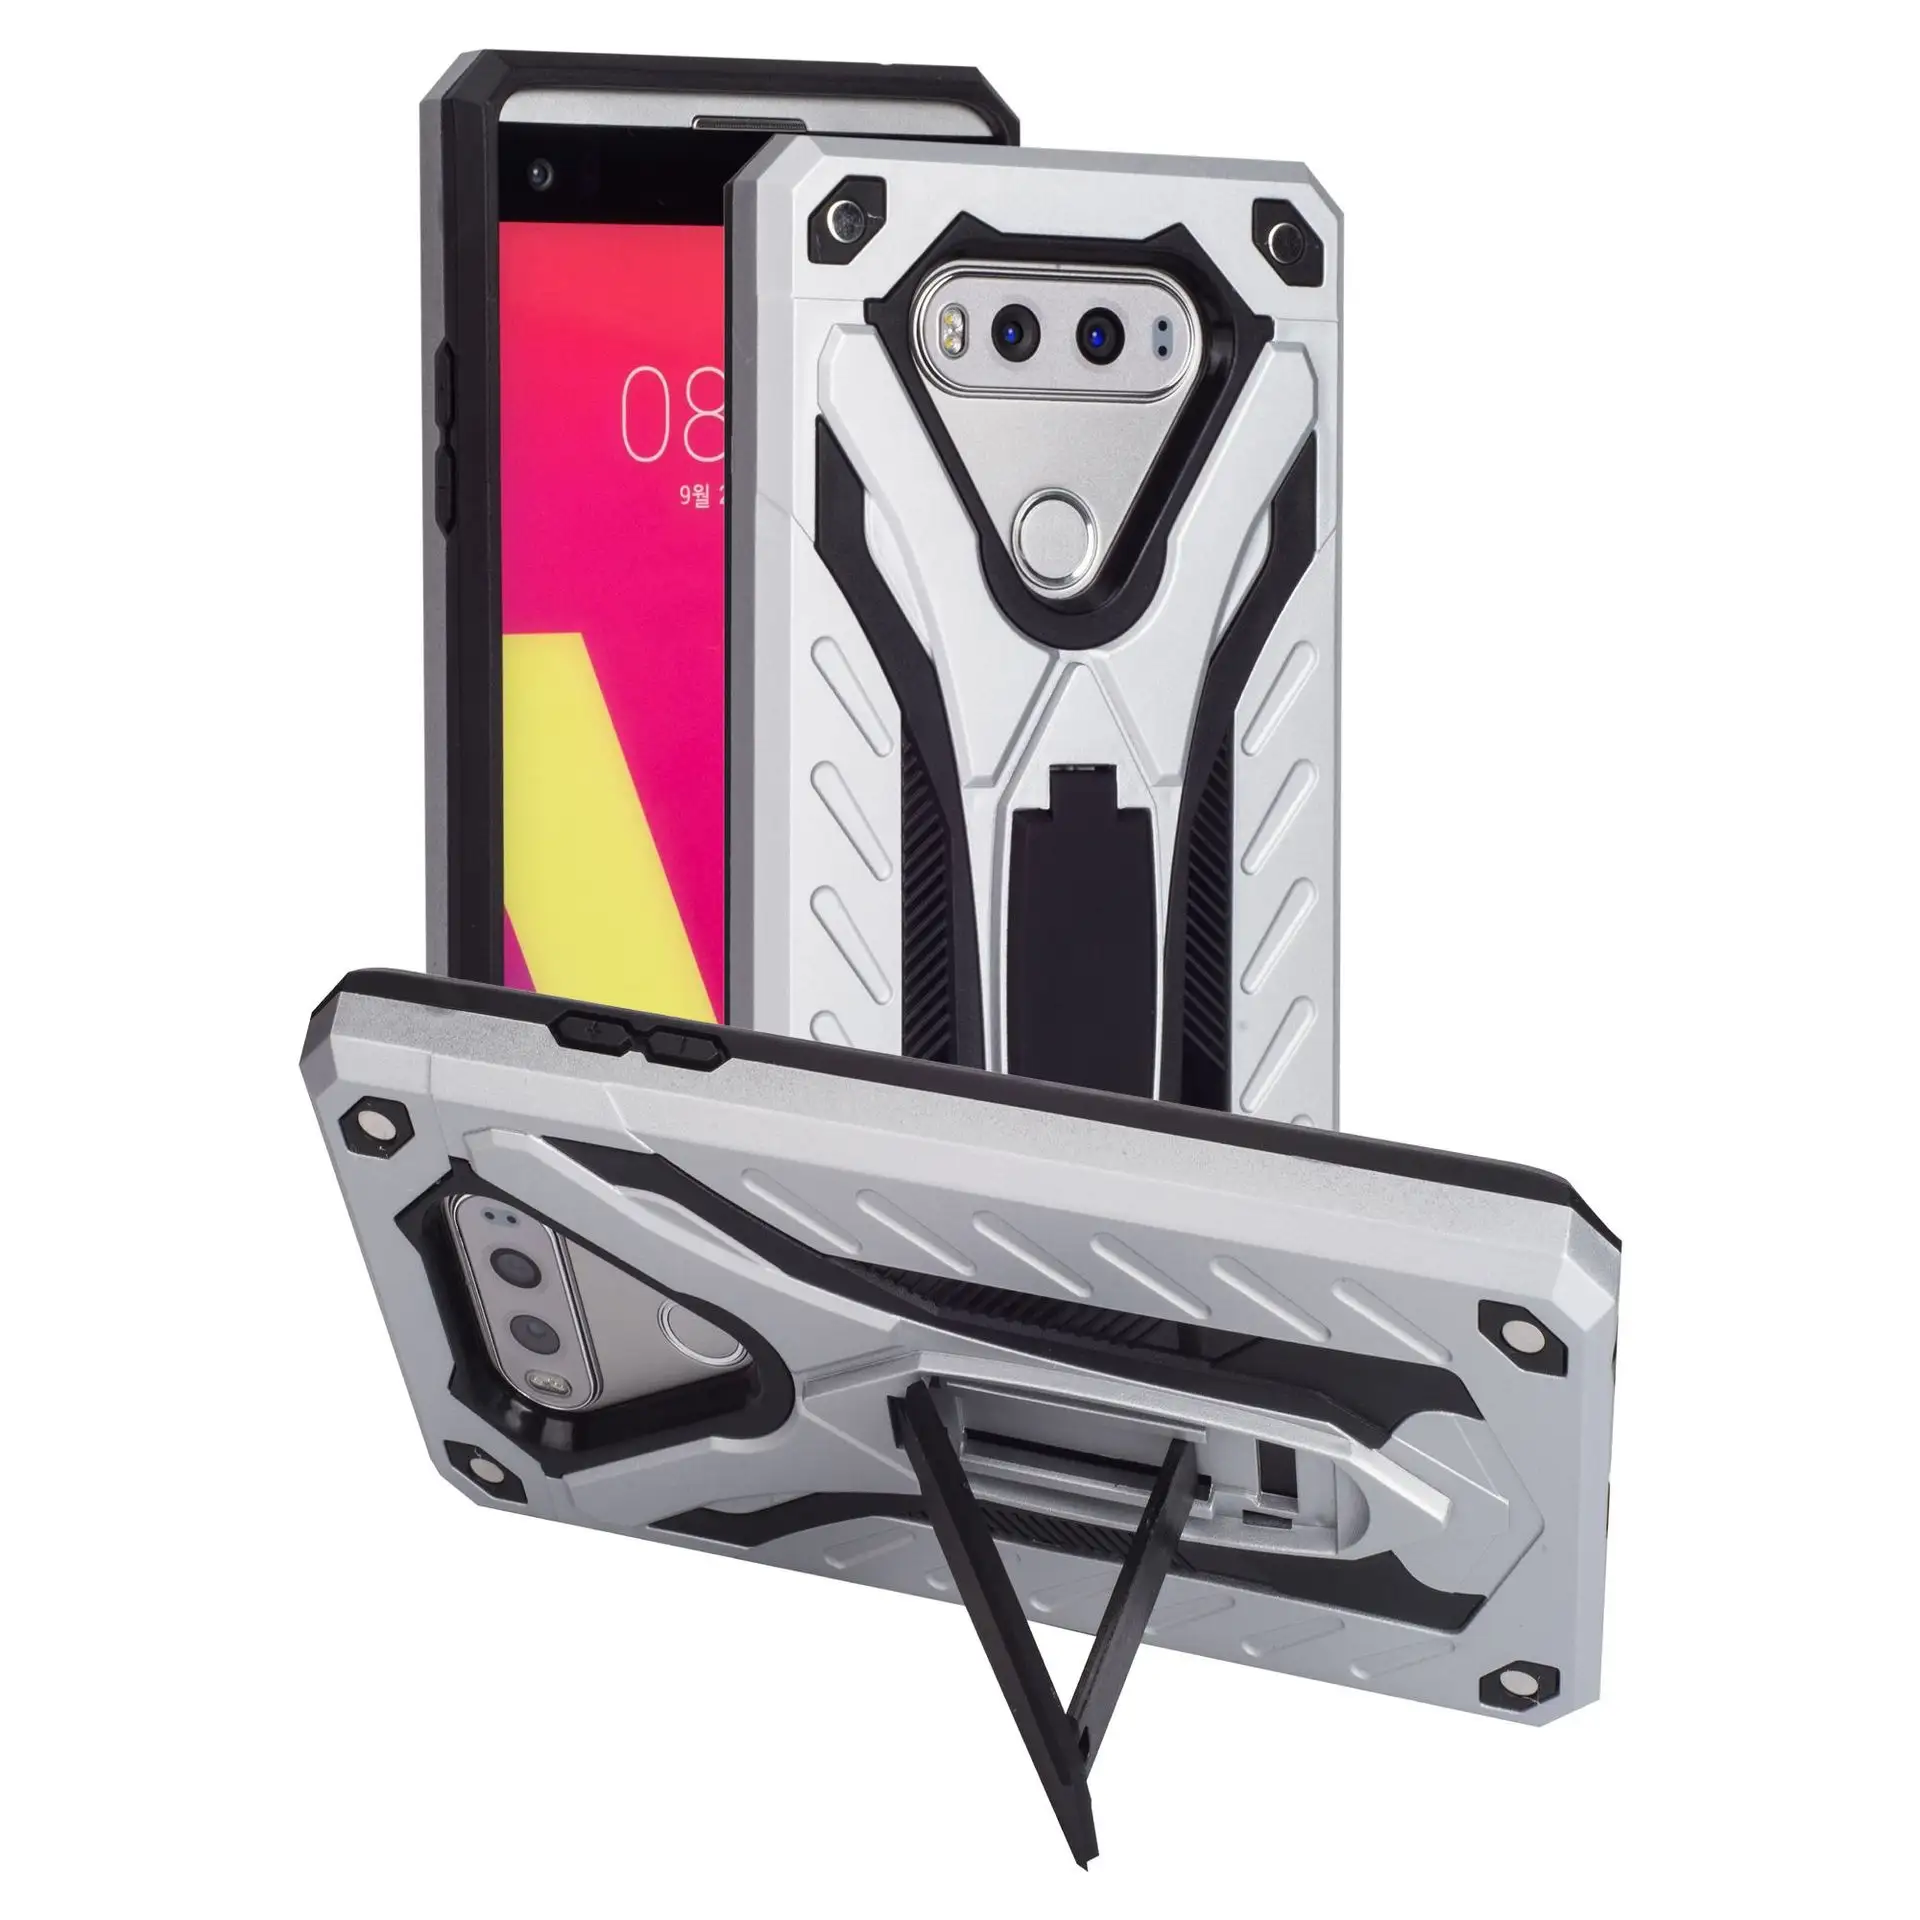 Shockproof Armor Phone Case For LG V30 Plus K10 K8 G5 G6 V5 V3 V20 With Rugged Bracket Anti Fall PC Protector Cover